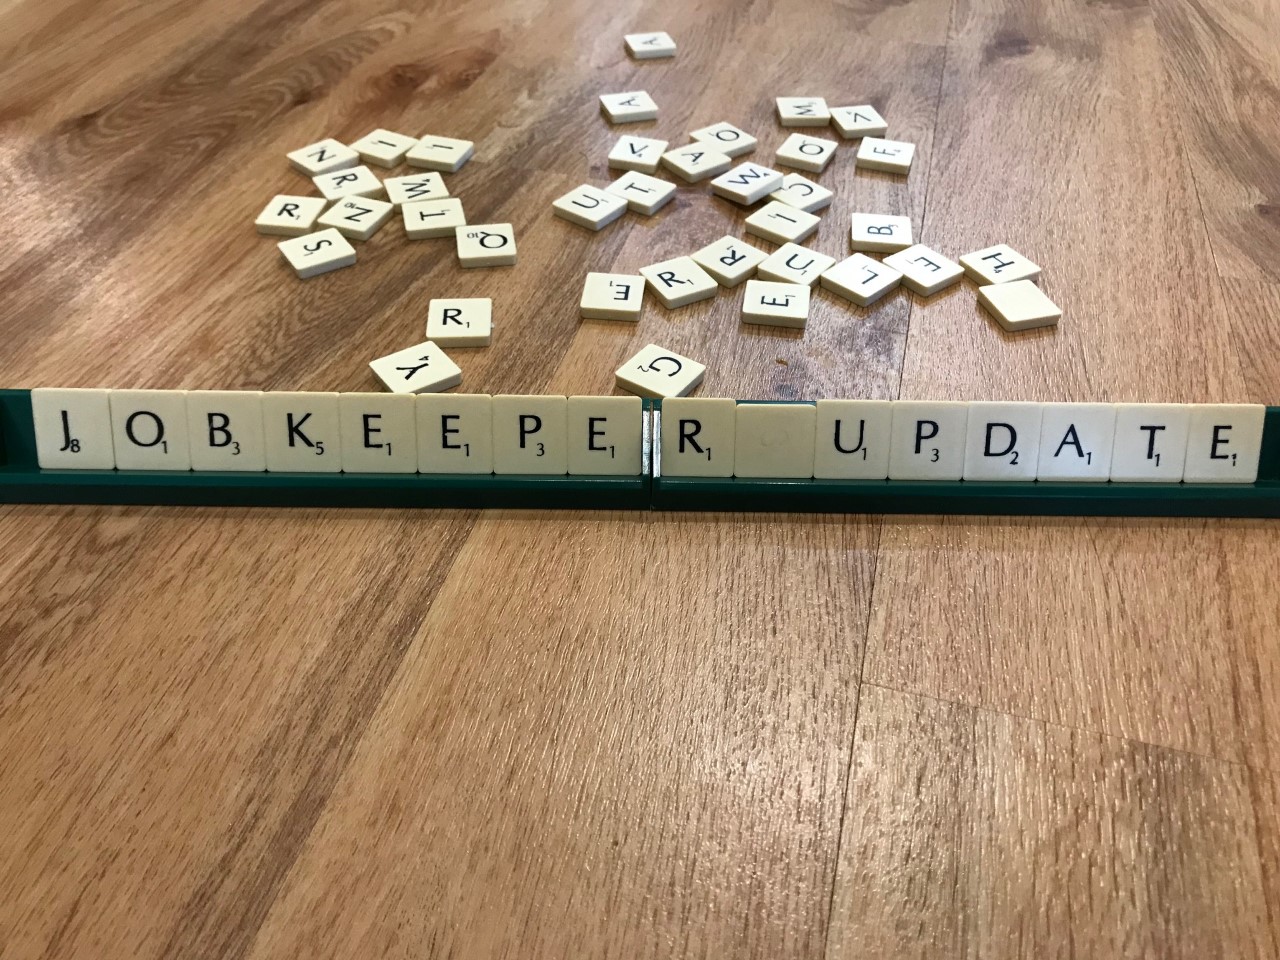 JobKeeper Update August